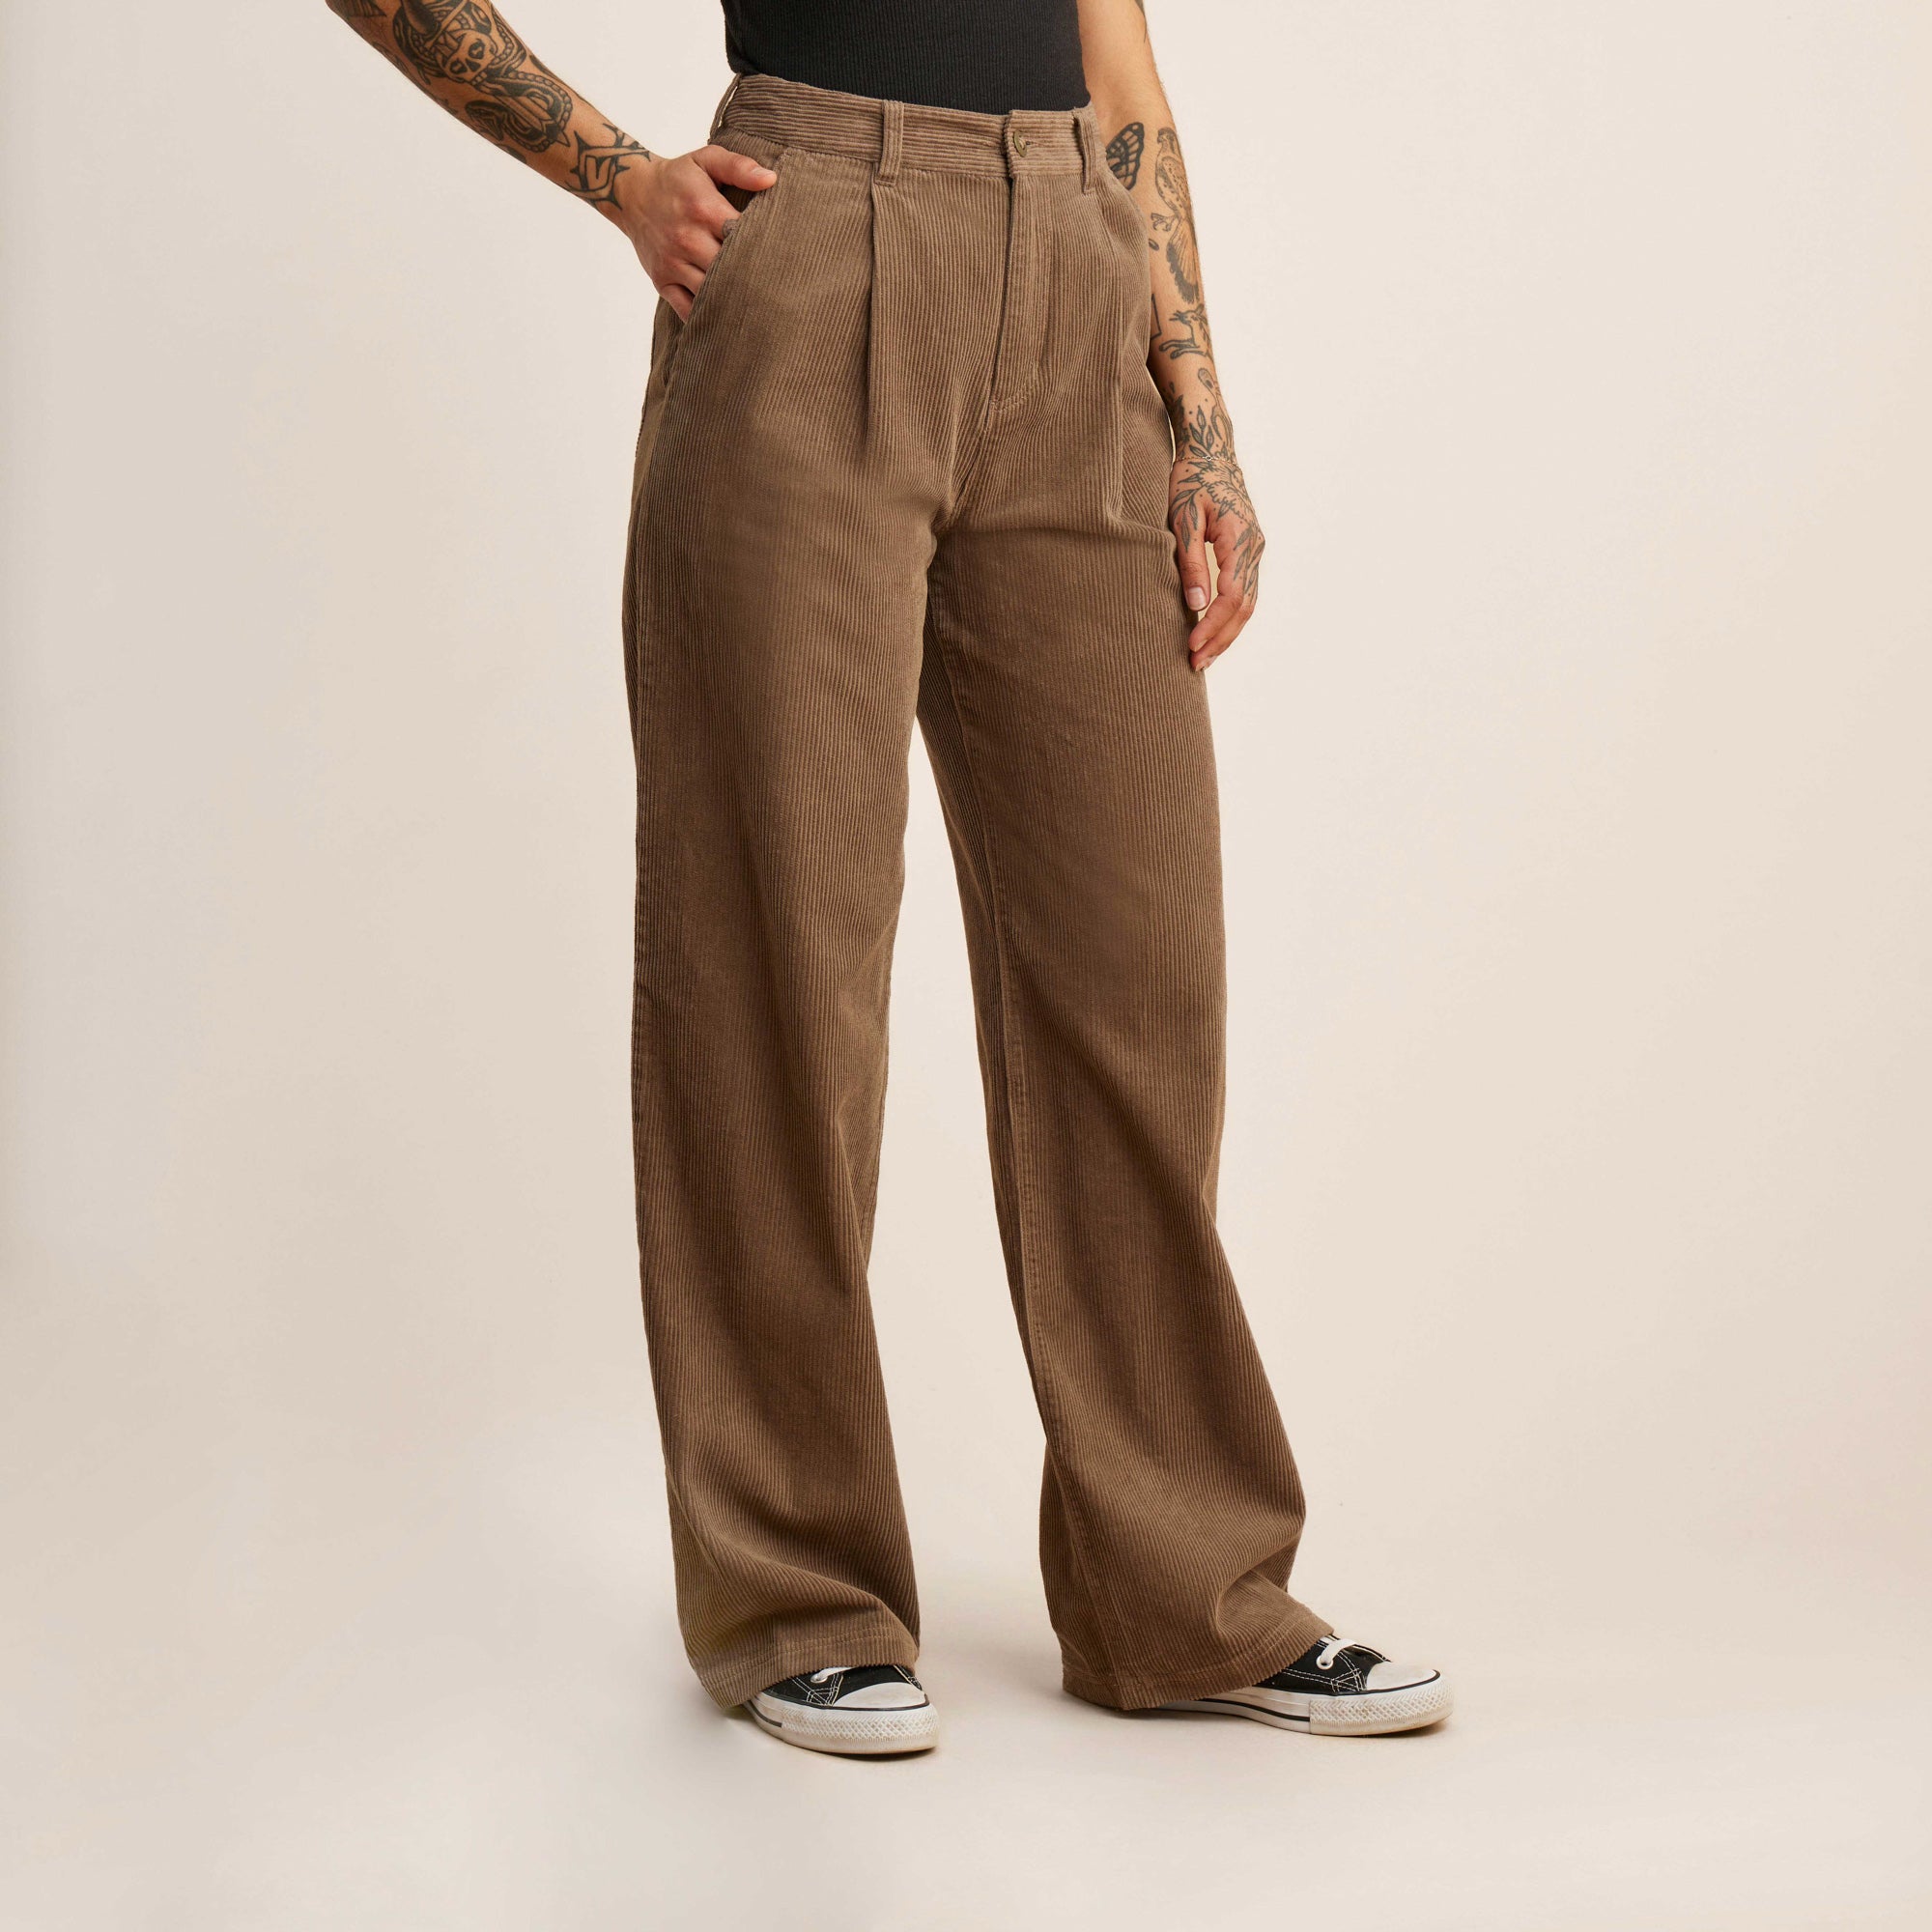 35 Best Pairs of Corduroy Pants for Women - Corduroy Pants 2022